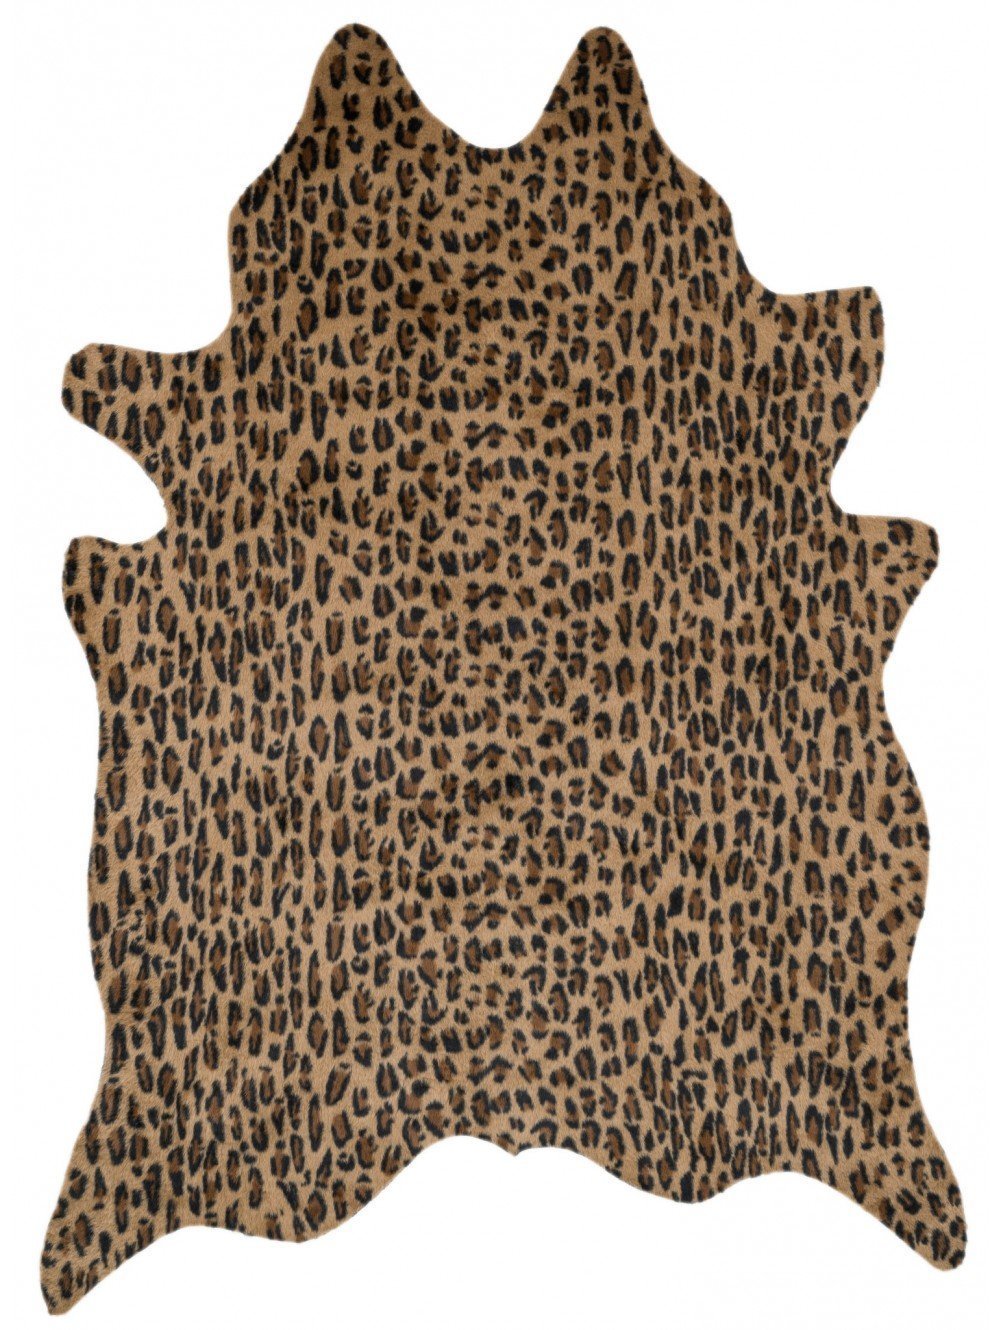 Exquisite Natural Cow Hide Rug Cheetah Print - Newstart Furniture